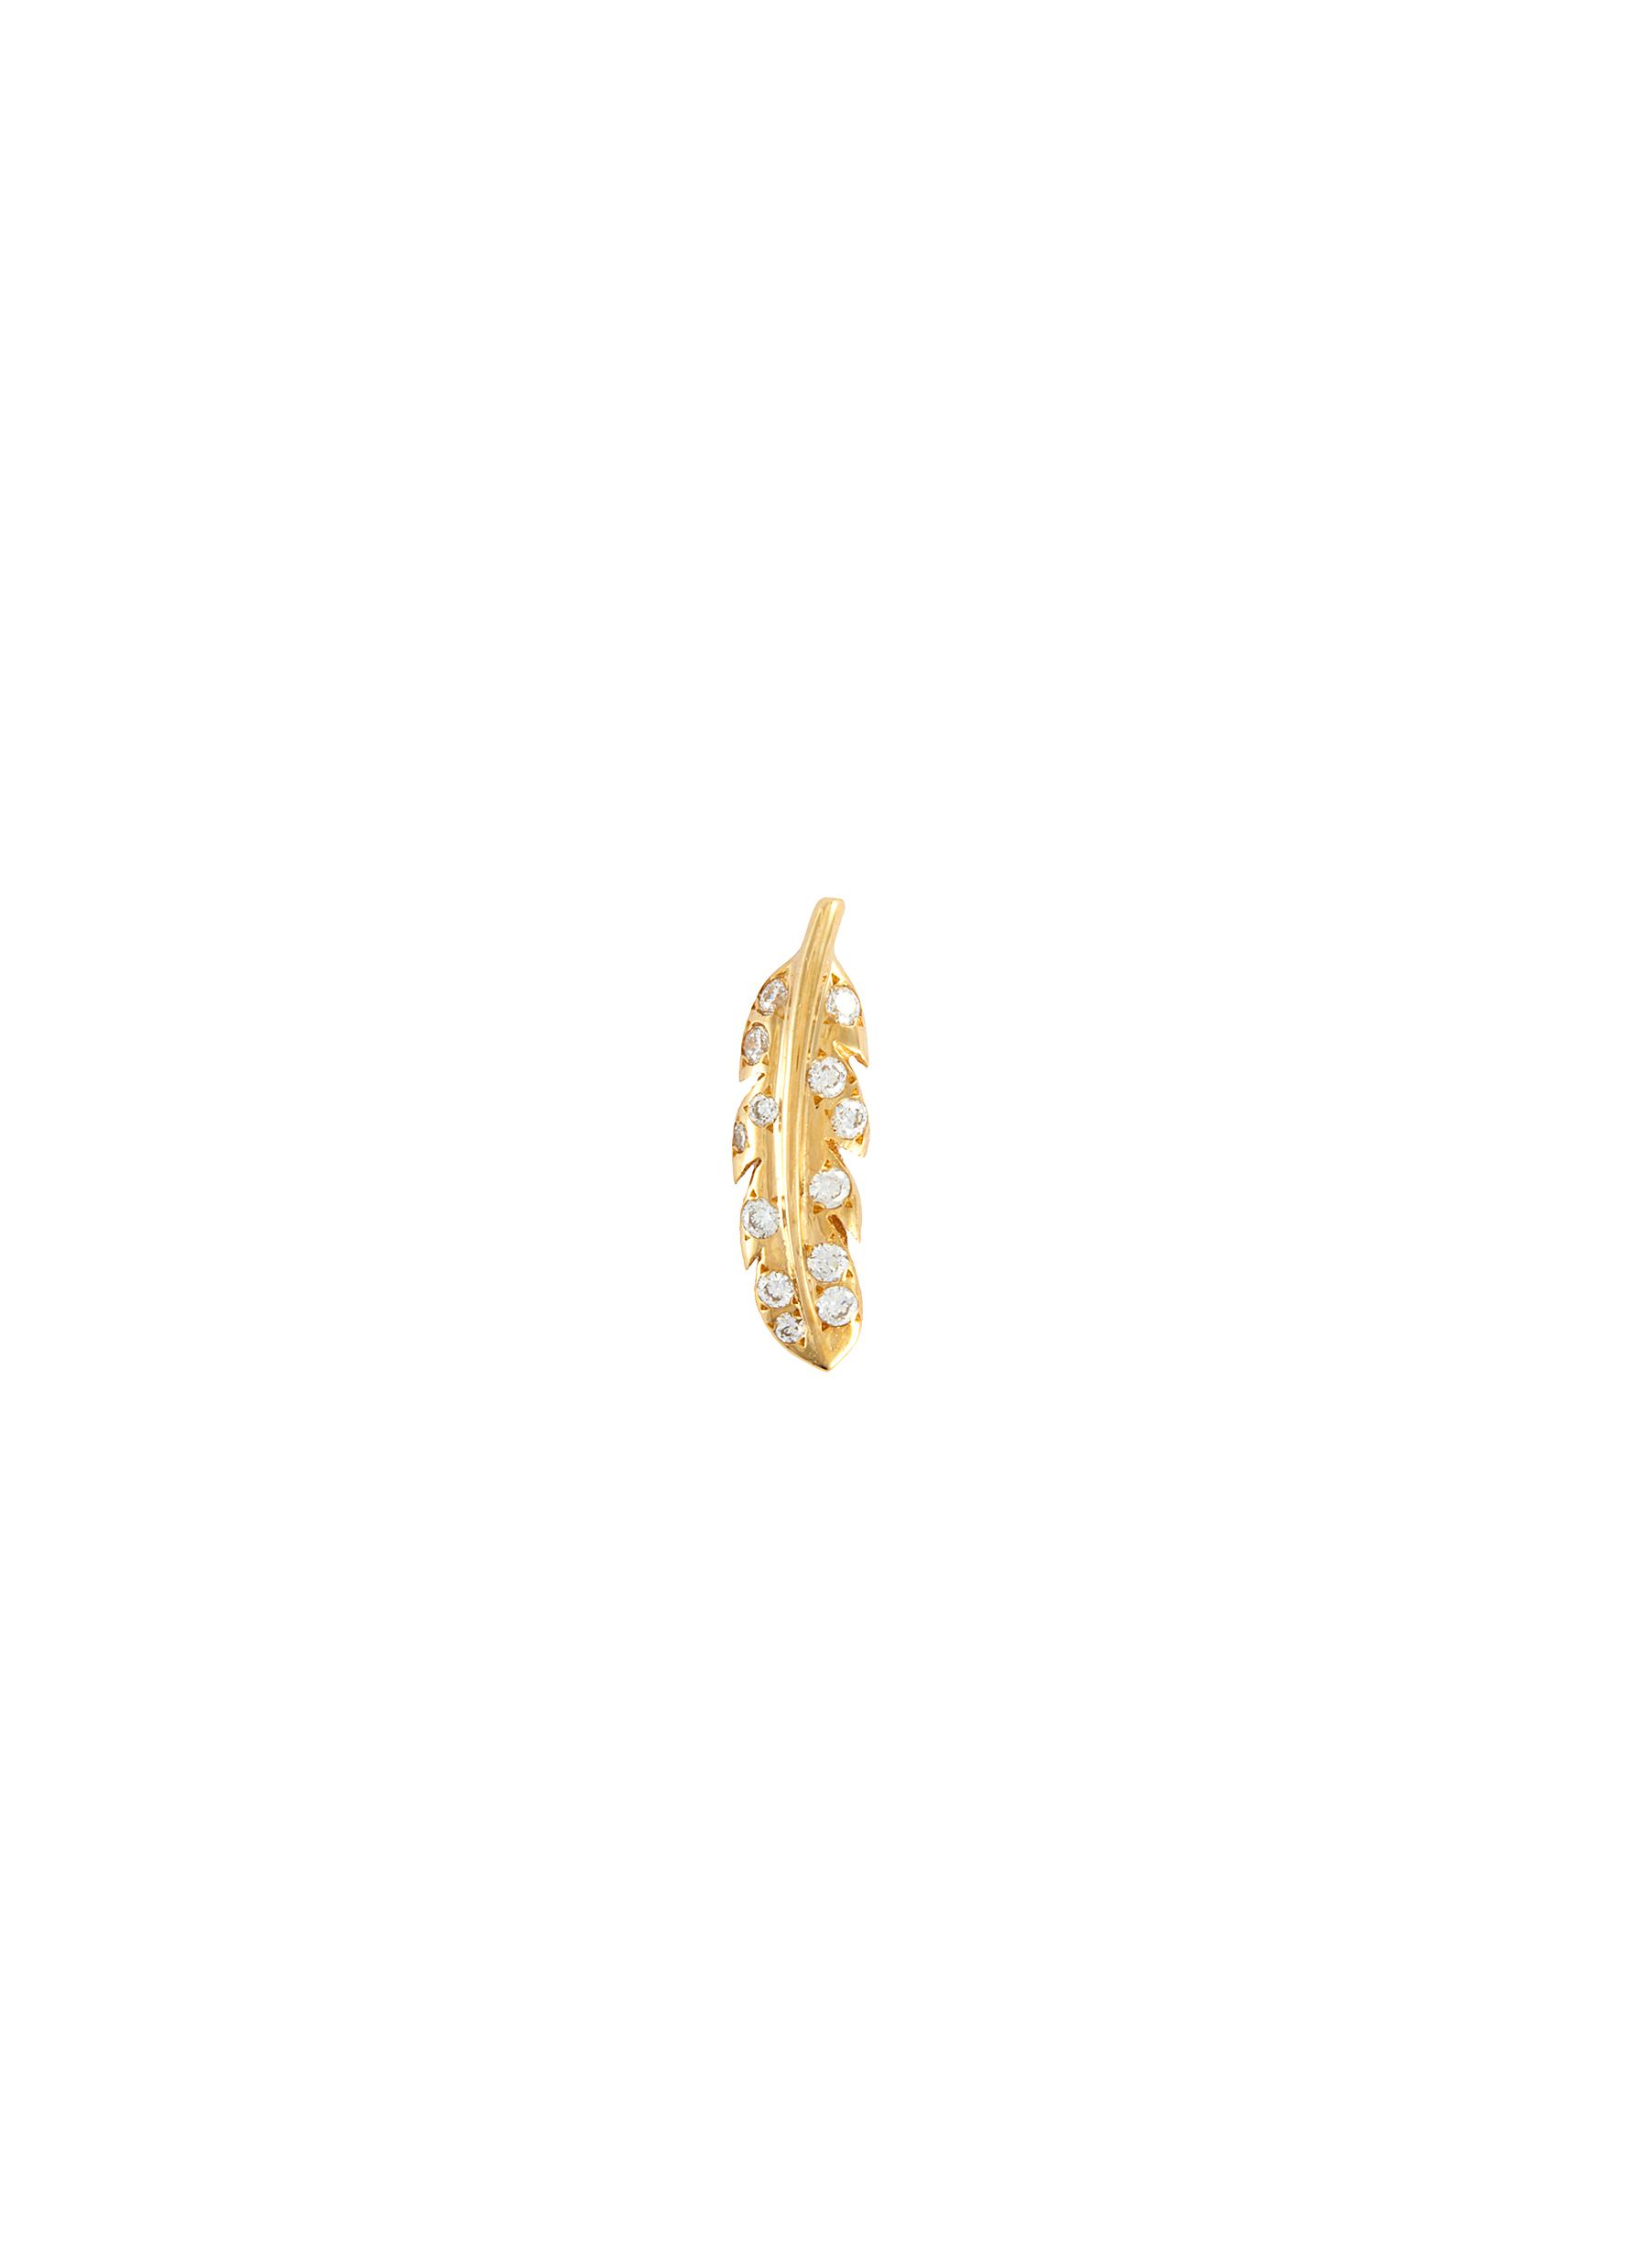 Loquet London Feather Diamond 18k Yellow Gold Charm